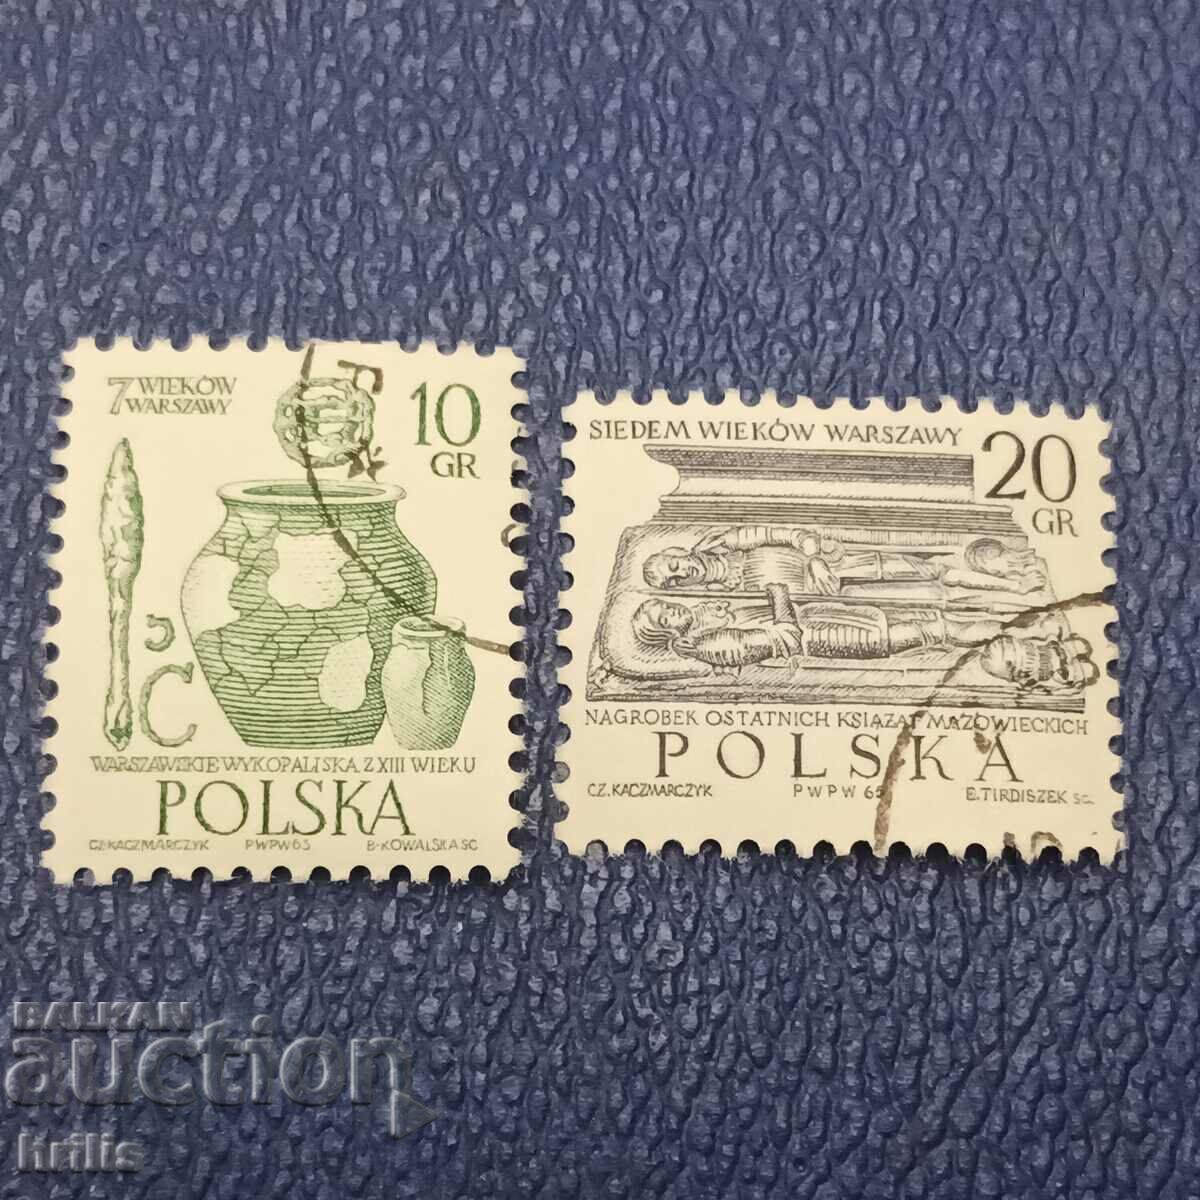 POLONIA ANII 1960 - CONSTATĂRI ARHEOLOGICE